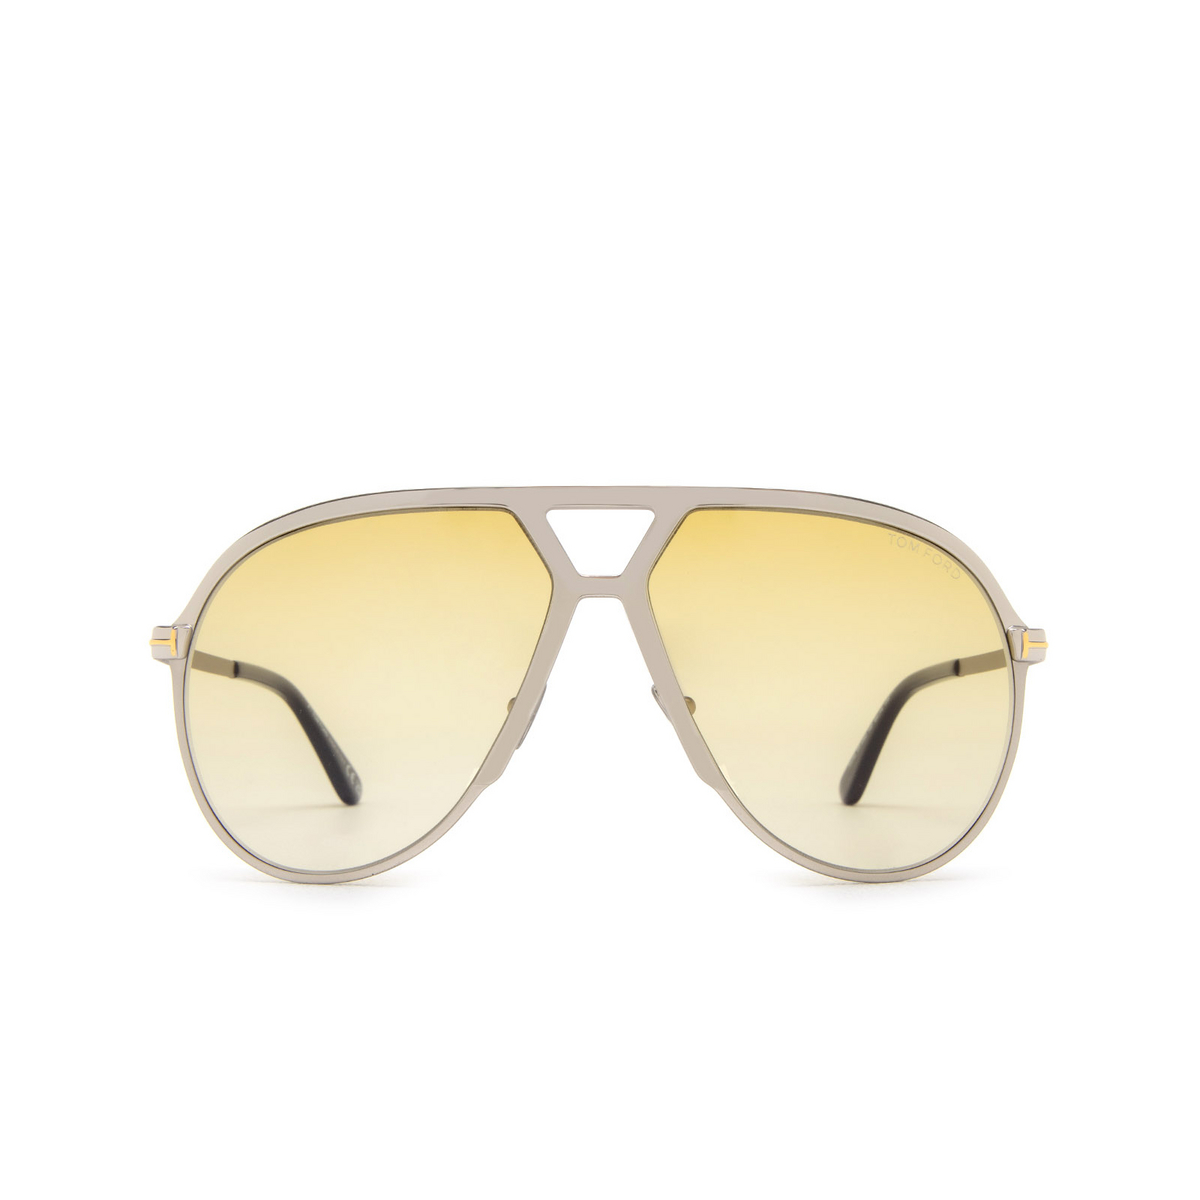 Tom Ford XAVIER Sunglasses 16F Shiny Palladium - front view